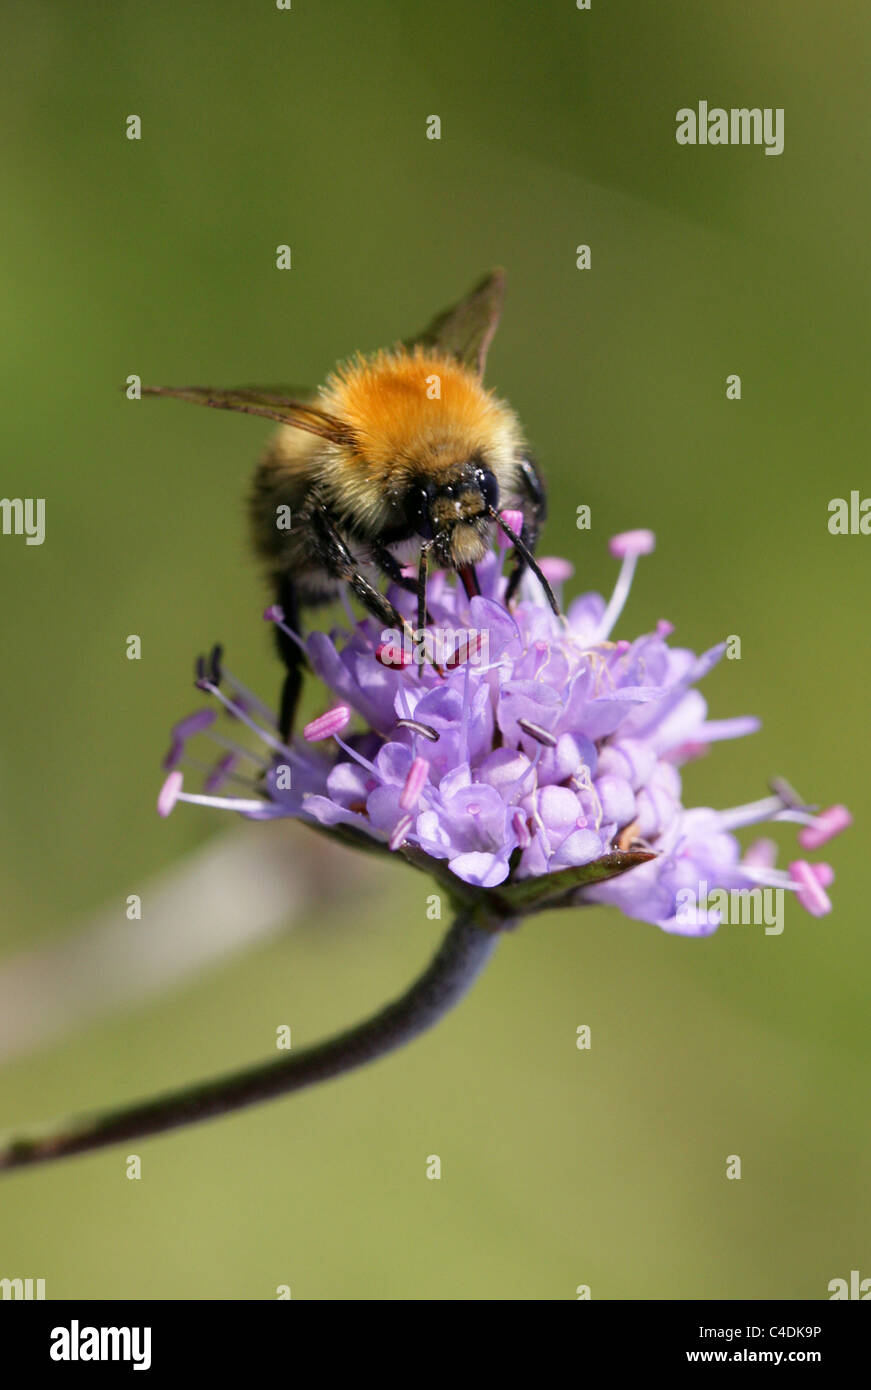 Common Carder Bumblebee, Bombus pascuorum, Apidae, Apoidea, Apocrita, Hymenoptera. On Devils-bit Scabius. Stock Photo